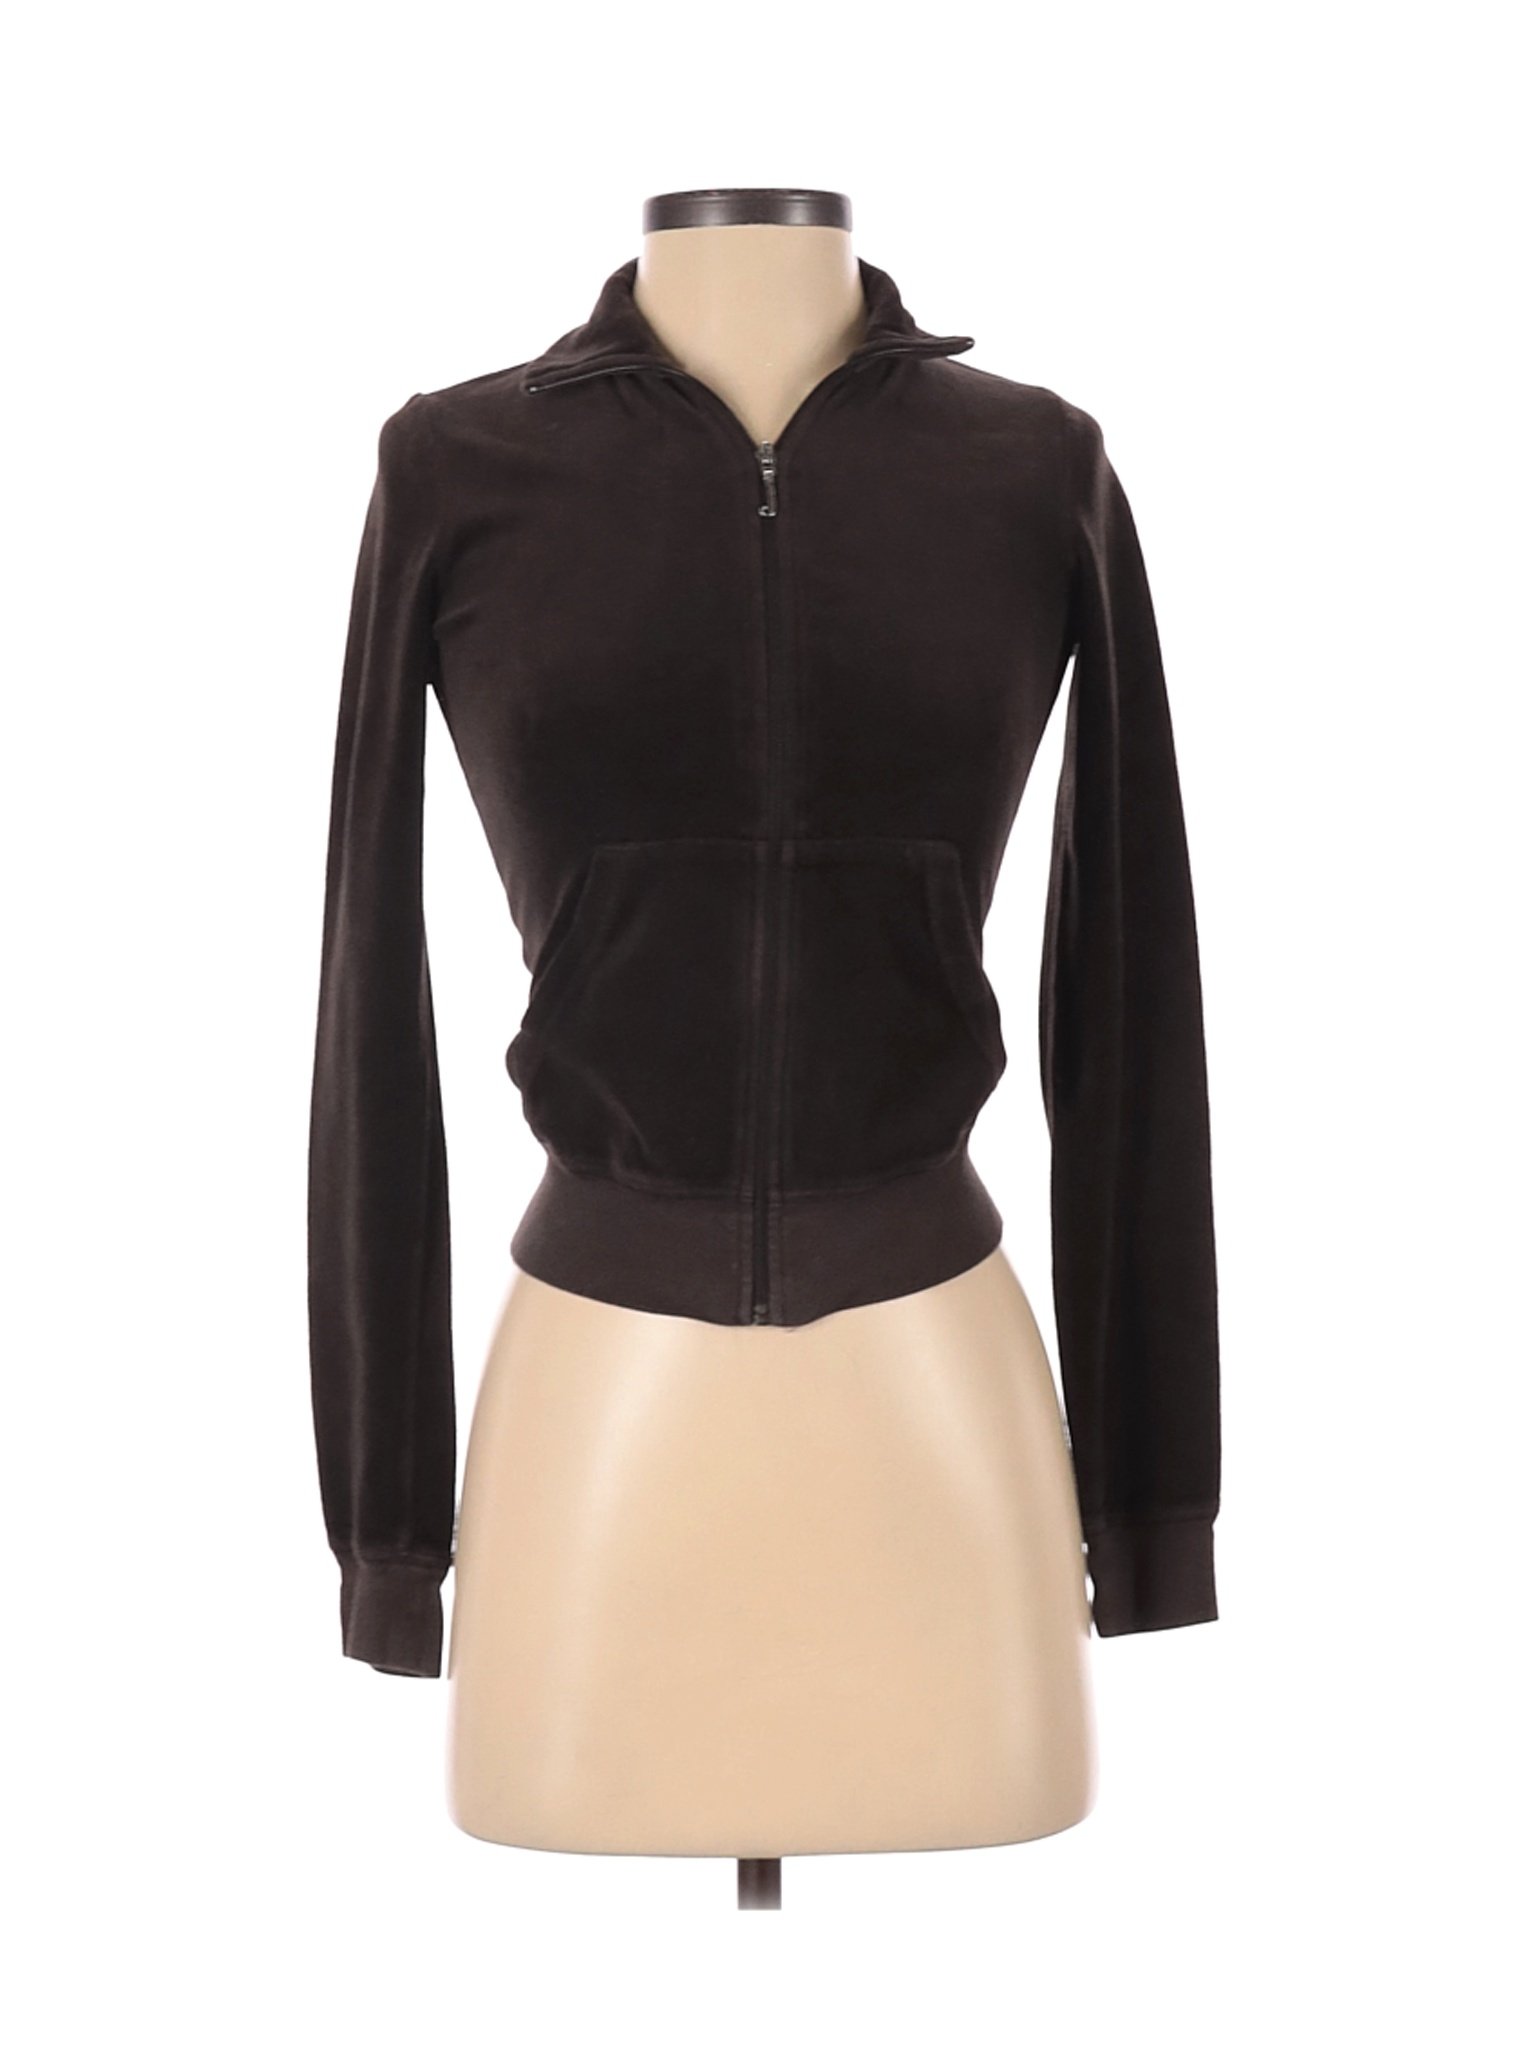 Juicy Couture Women Black Jacket P | eBay